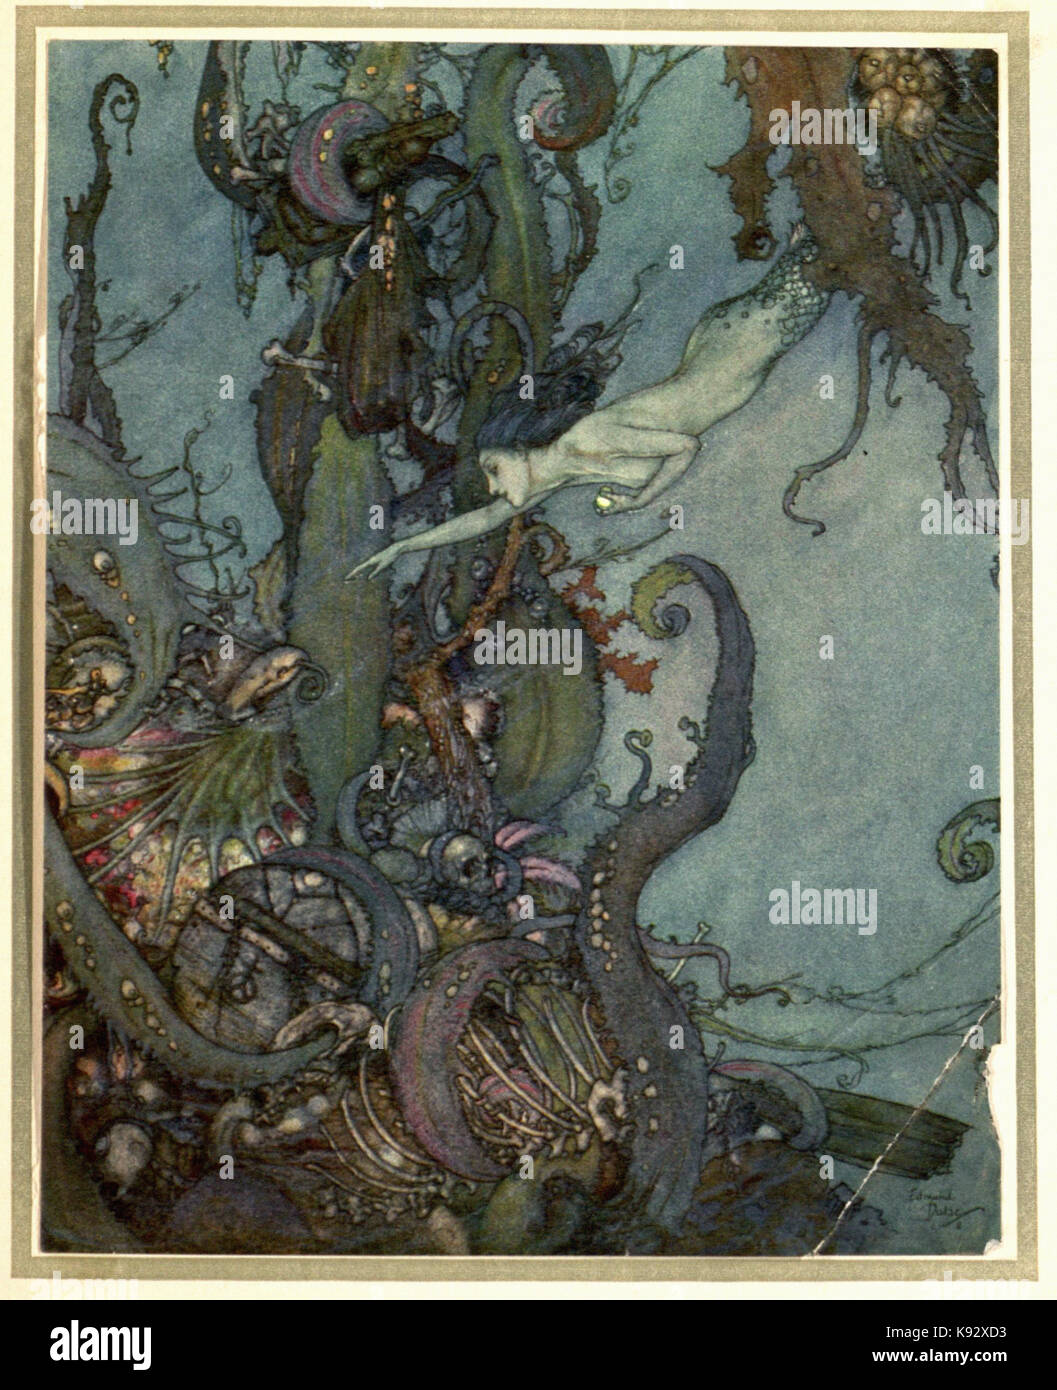 Edmund Dulac illustration -  little mermaid Stock Photo